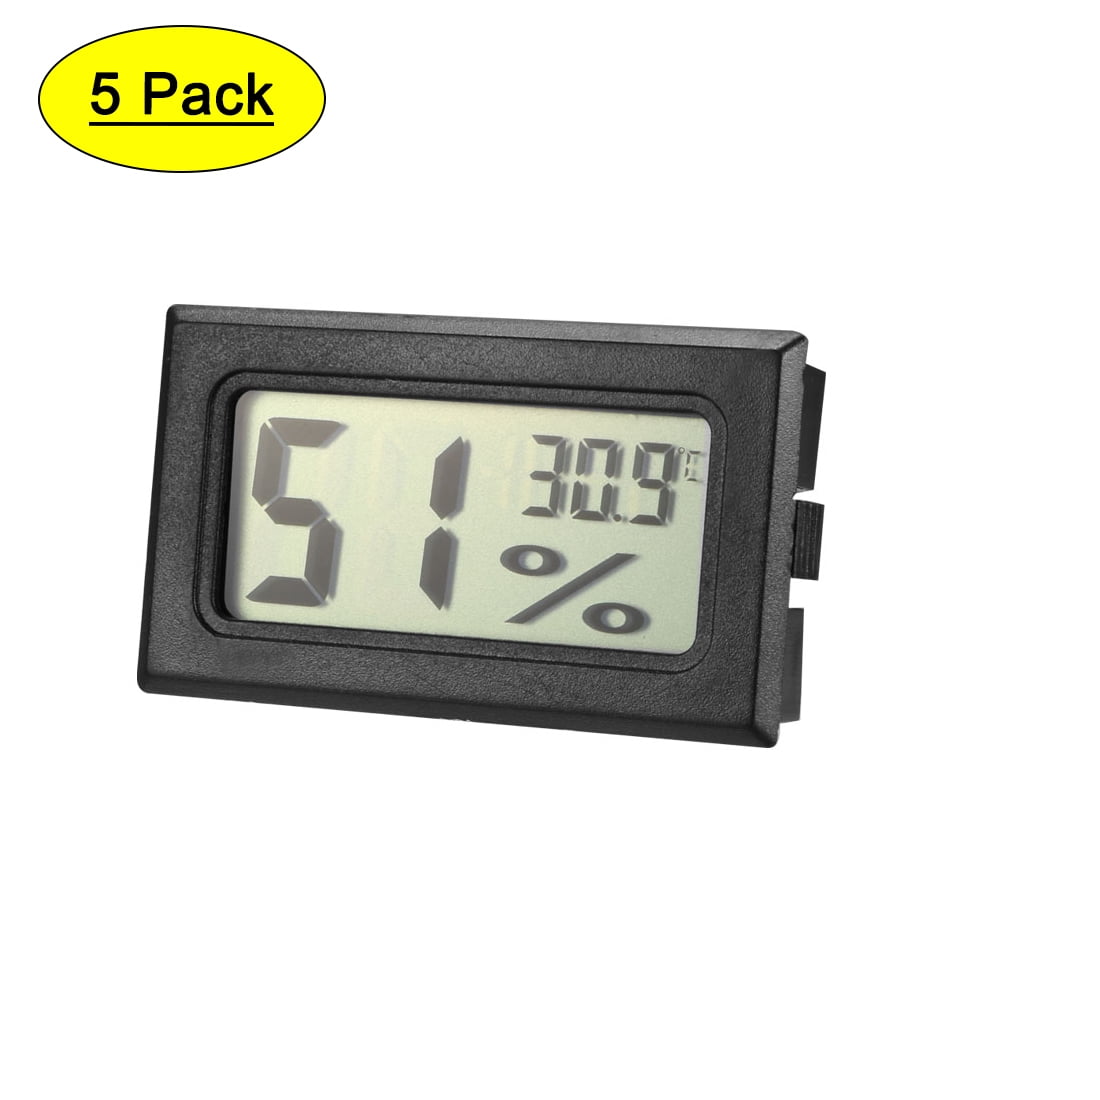 Caliber IVR 4R Silver Round Digital Hygrometer & Thermometer 1136 